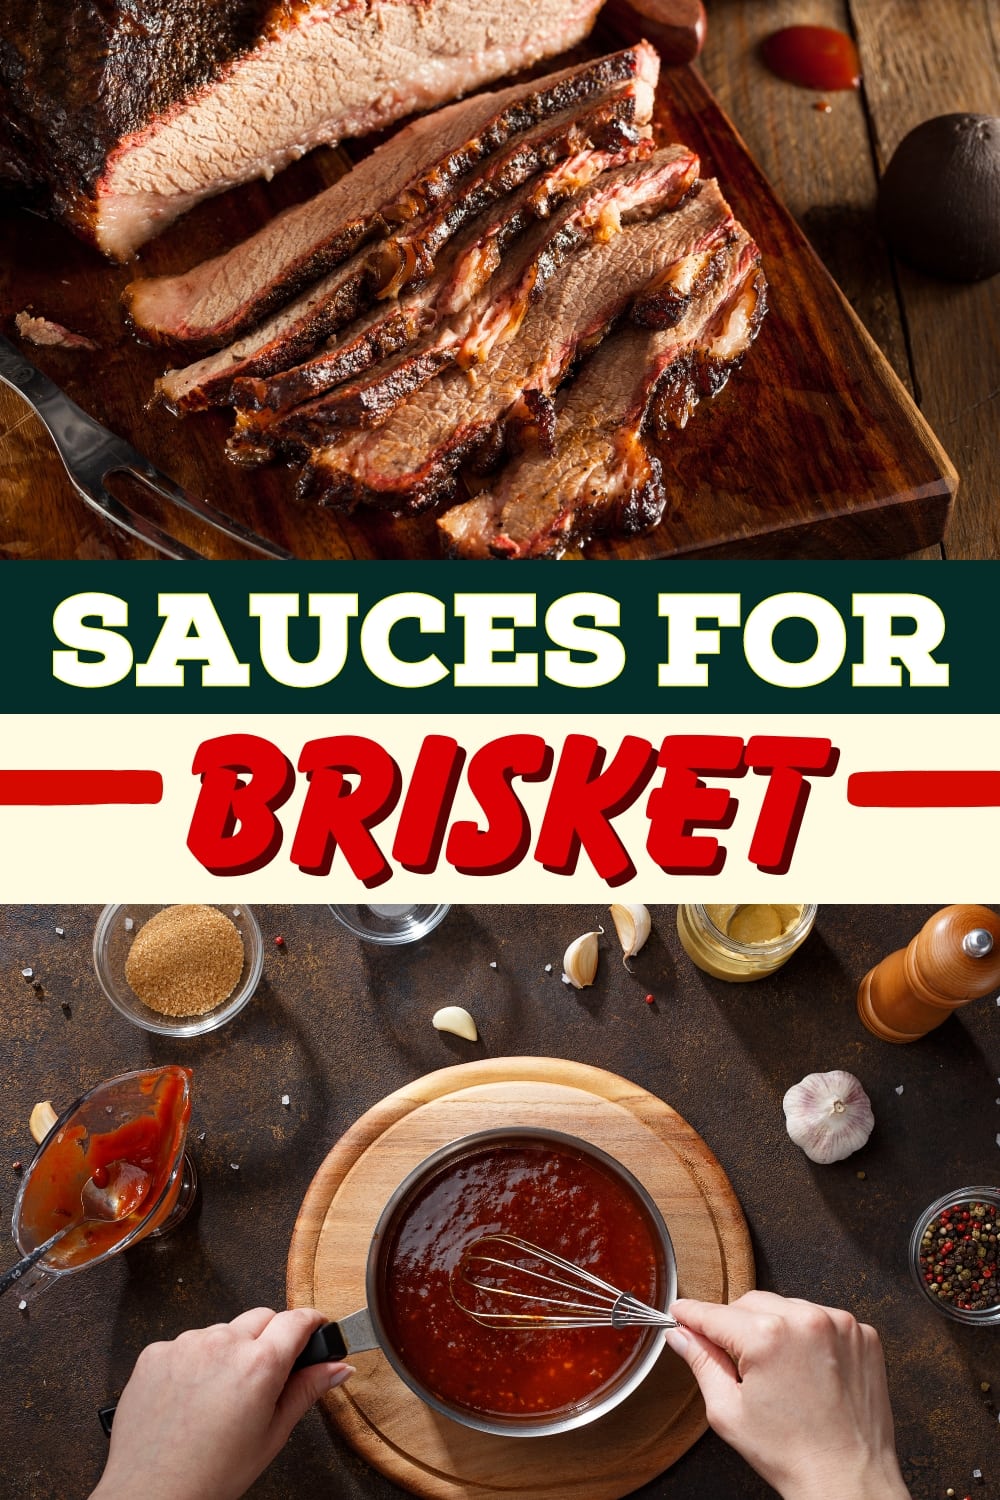 Sauces for Brisket